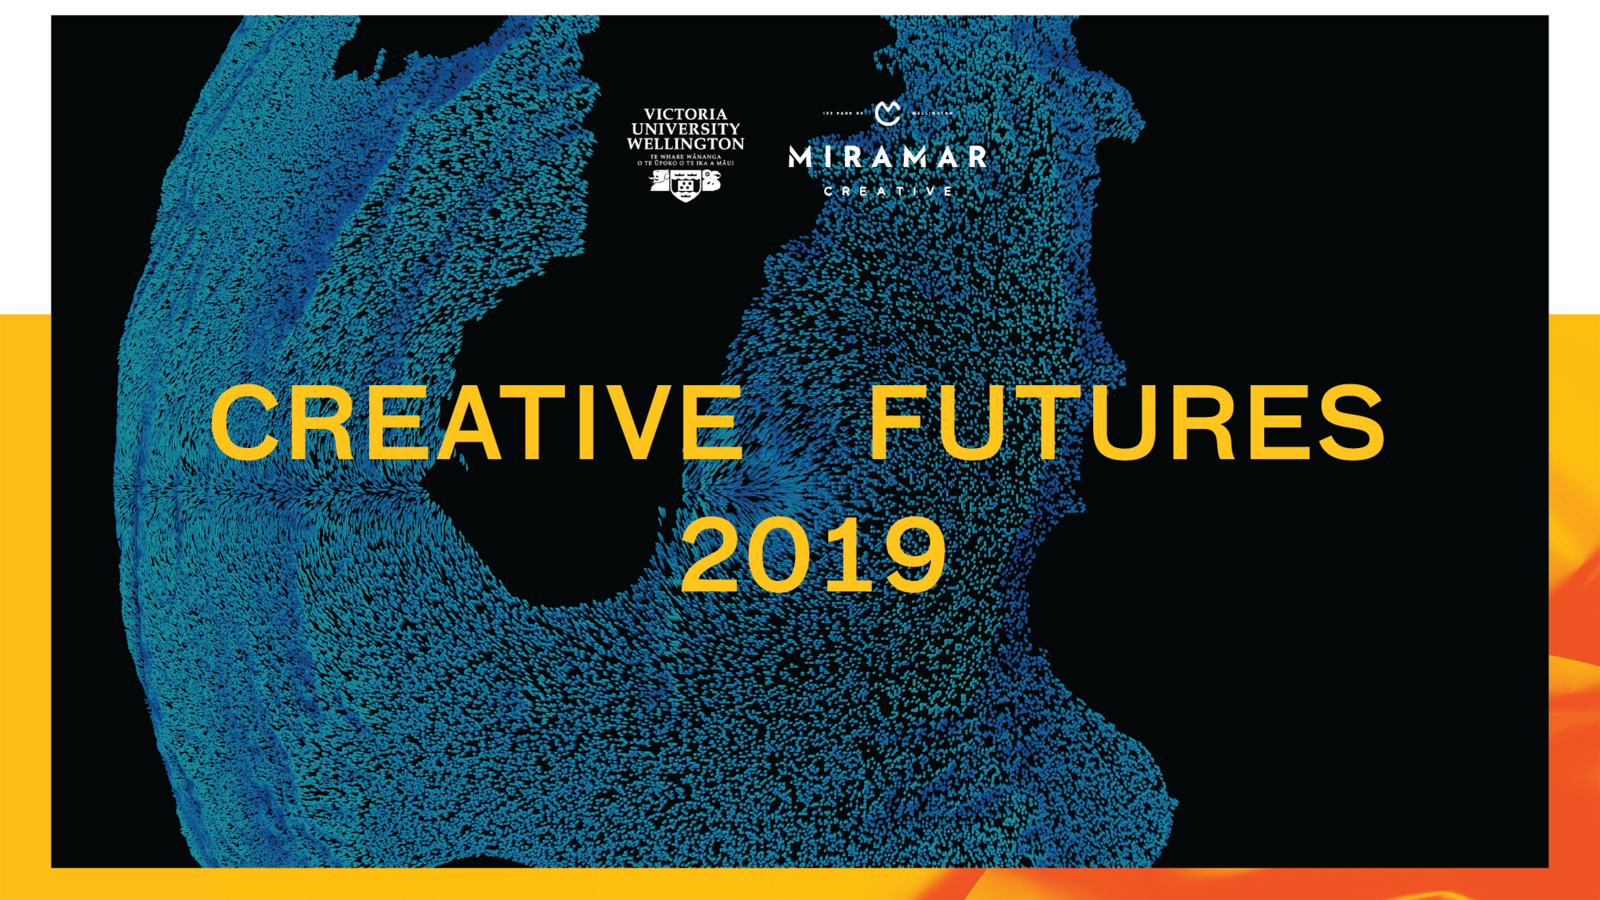 Creative Futures event in 2019